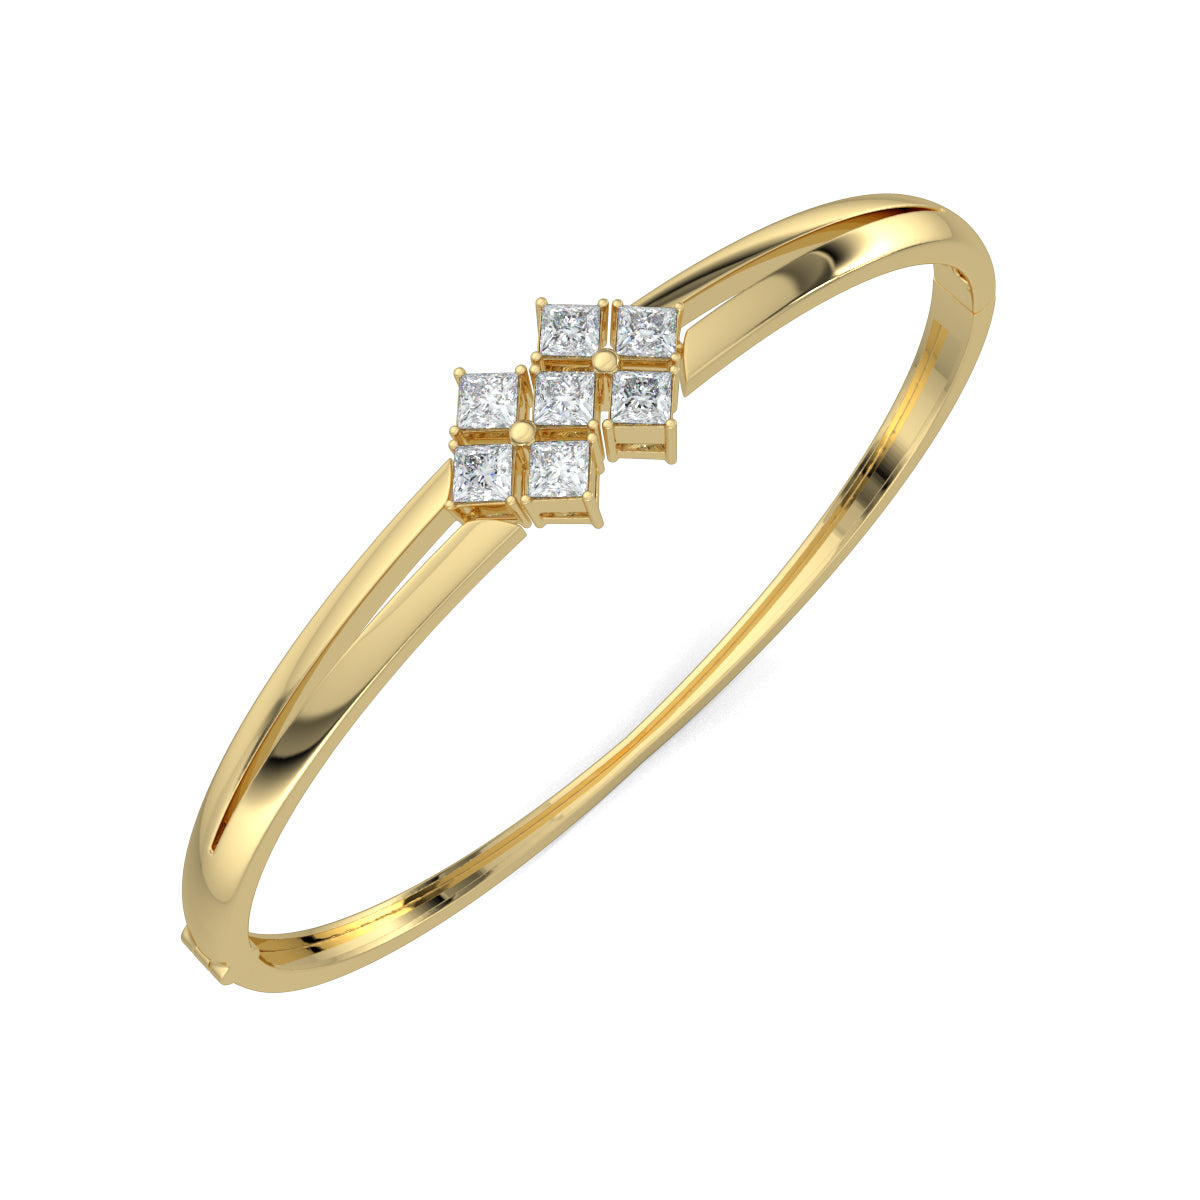 Yellow Gold, Diamond Bracelet, Natural diamond bracelet, Lab-grown diamond bracelet, Princess cut diamond bracelet, Oval bracelet, Diamond jewelry, Luxury bracelet, Statement bracelet, Fashion accessory.